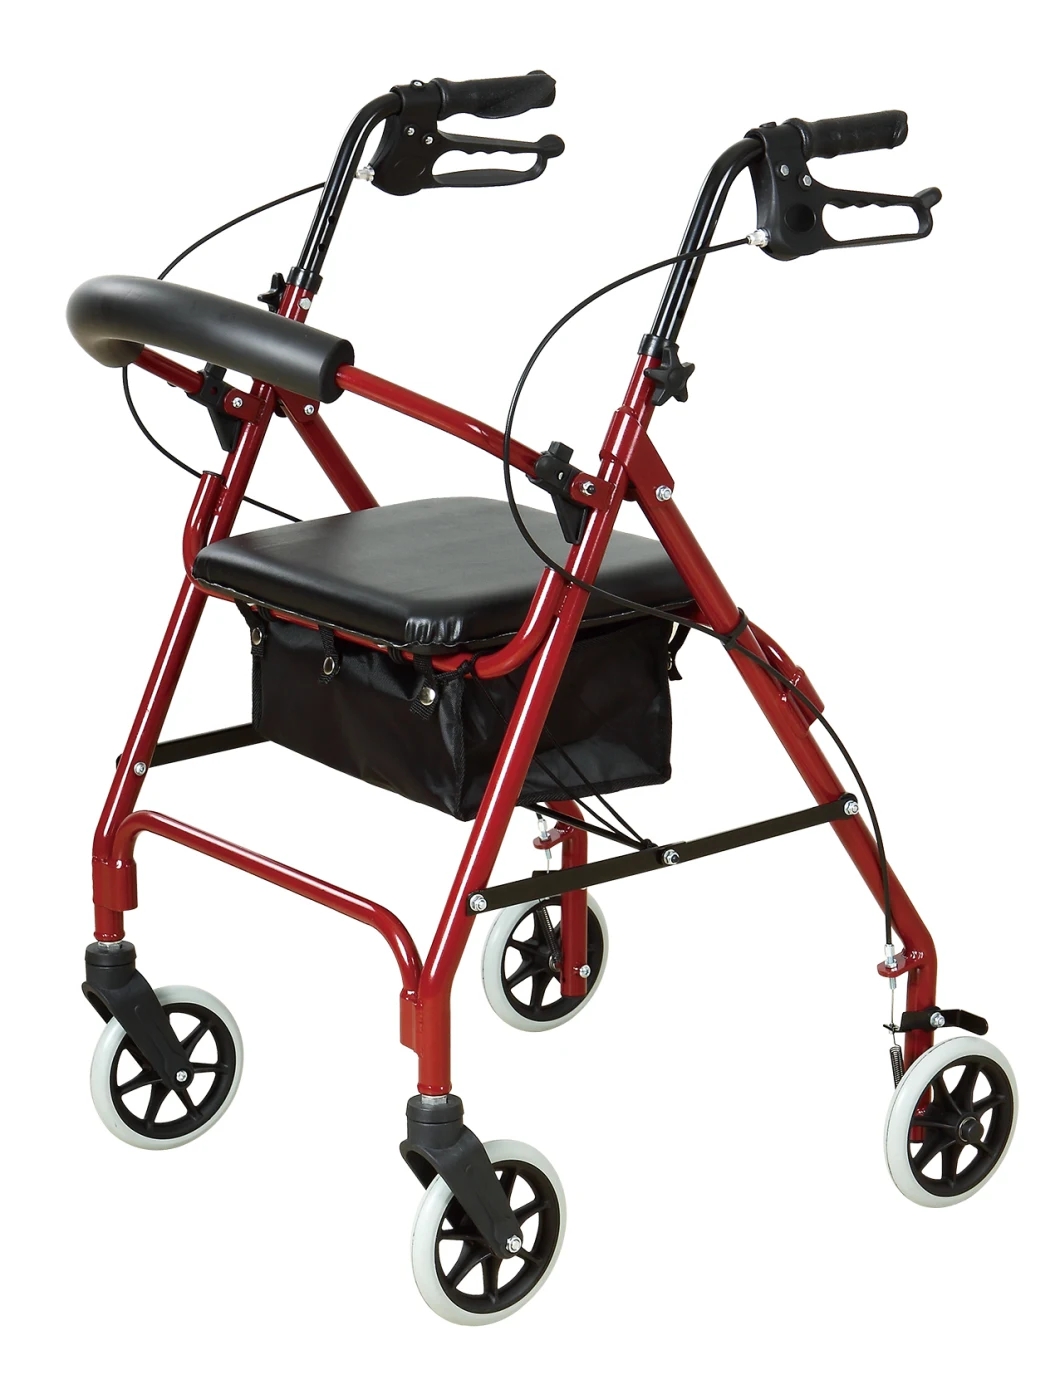 Forearm Mobility Aids Walking Adult Walker Medical Lightweight Rollator